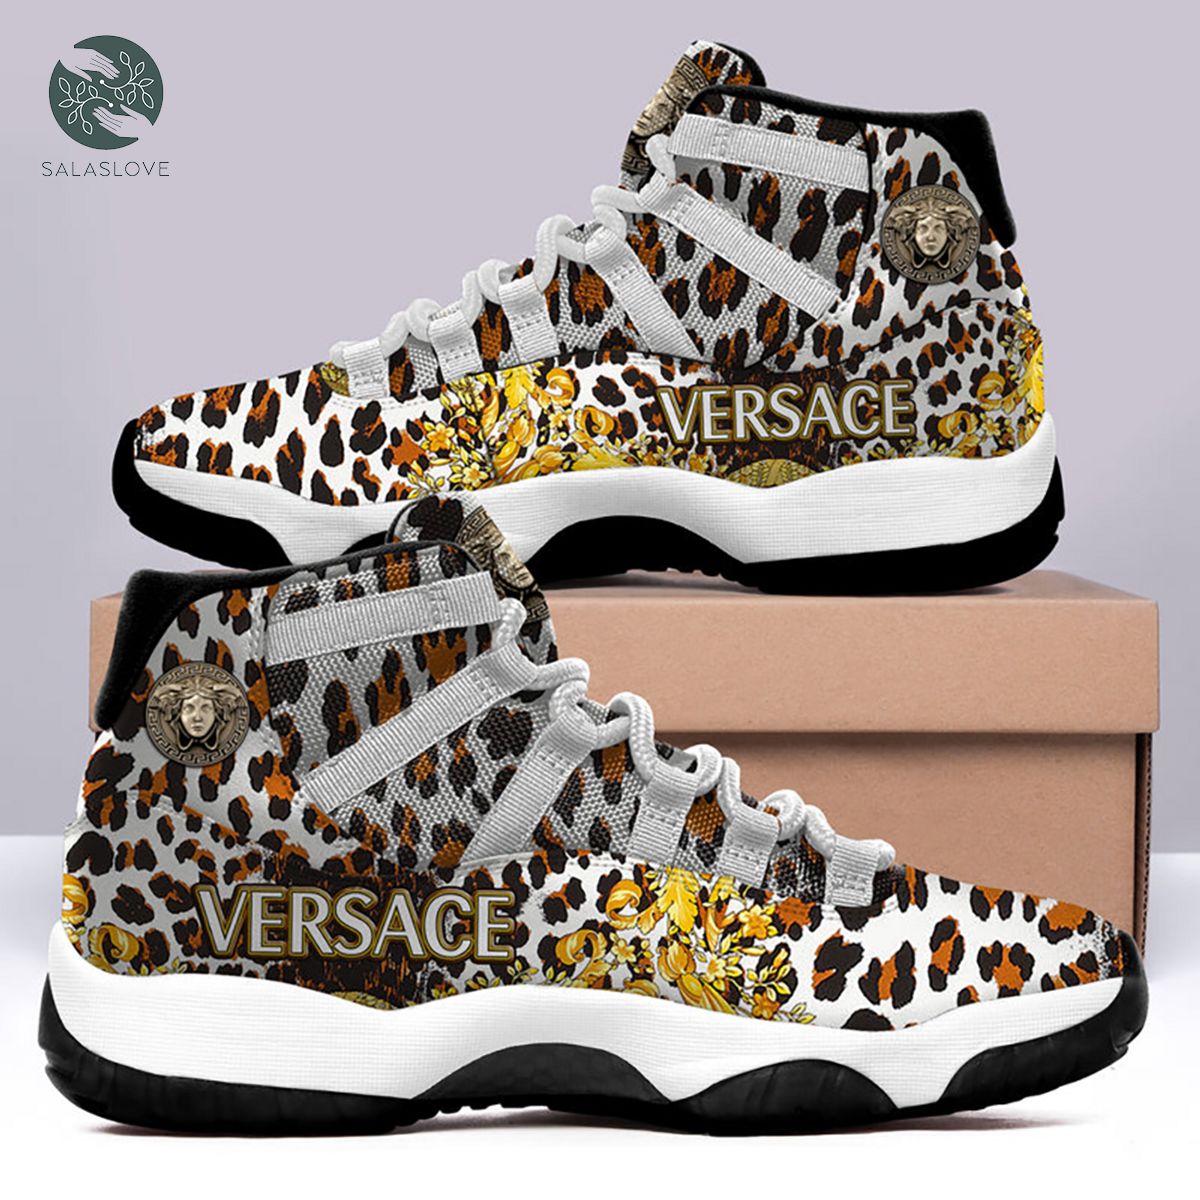 Gianni Versace Leopard Air Jordan 11 Sneakers Shoes Hot For Men Women